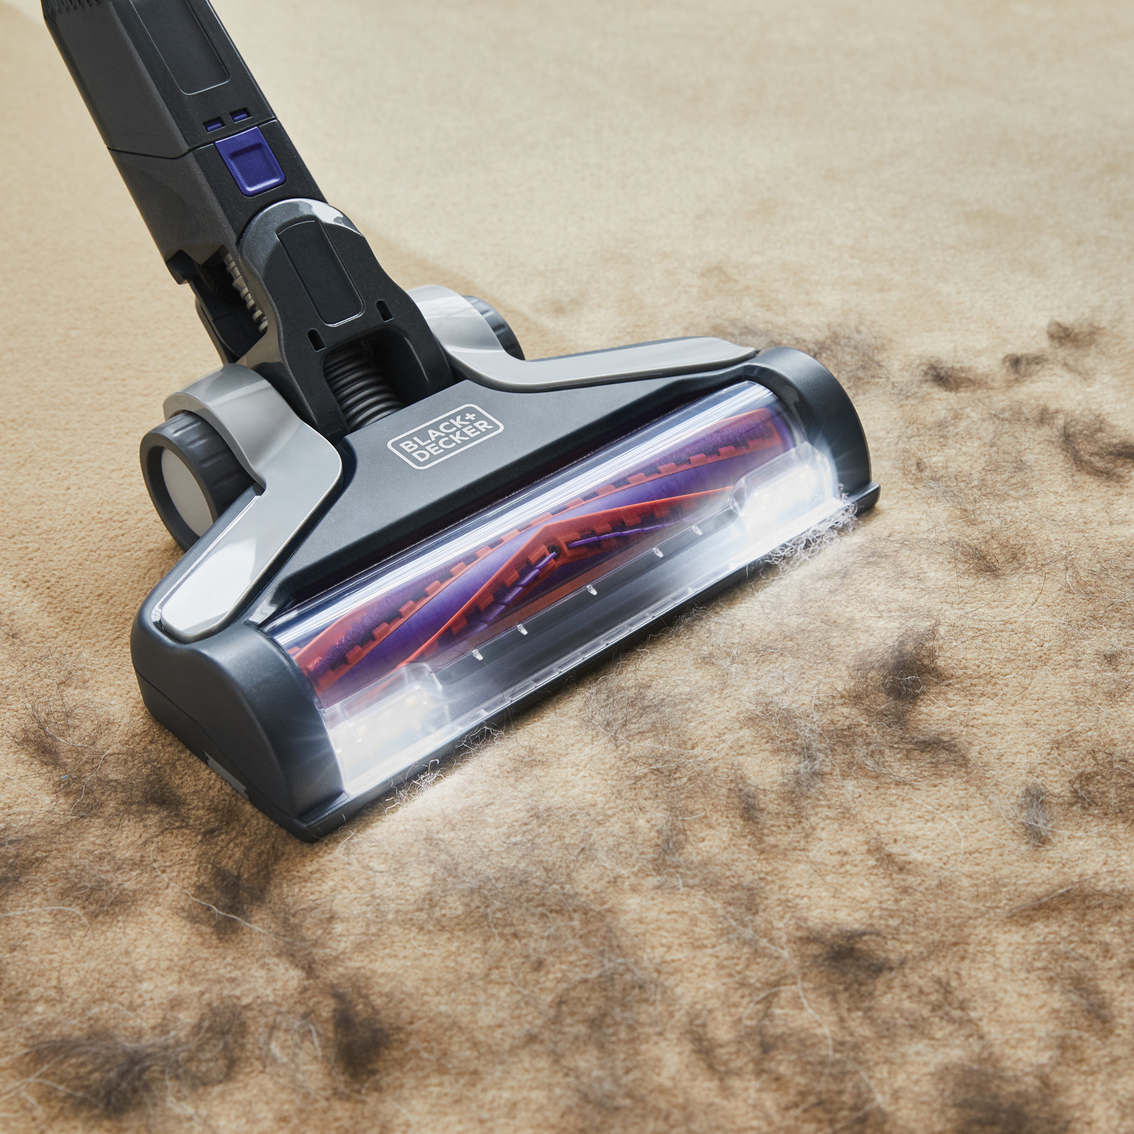 Black + Decker Powerseries Extreme Pet Cordless Stick Vacuum